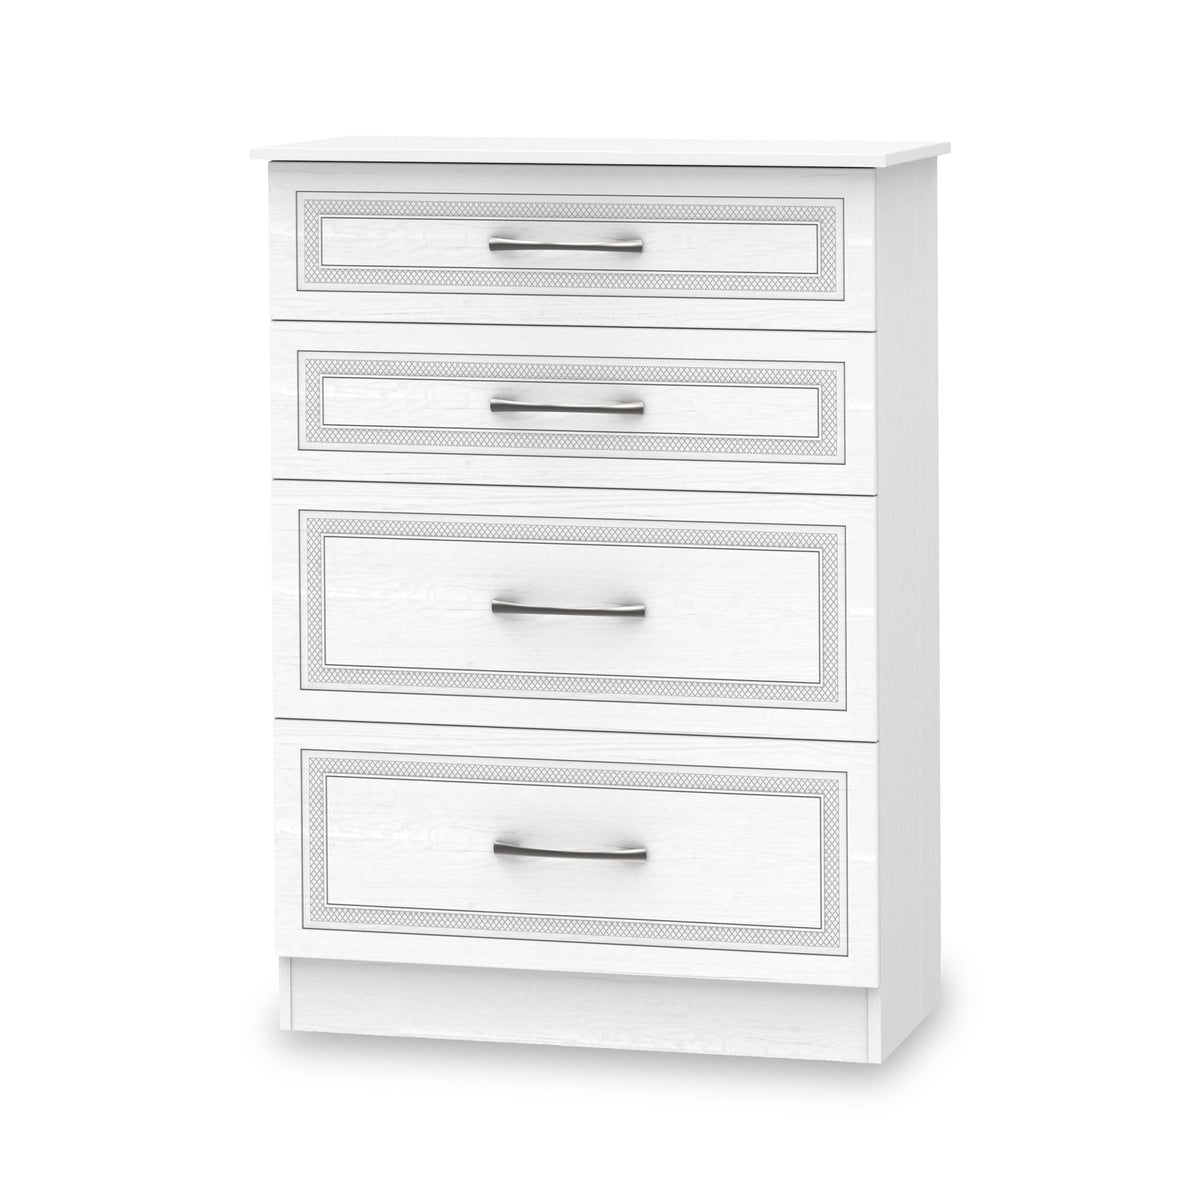 Killgarth 4 drawer deep chest from Roseland Furniture